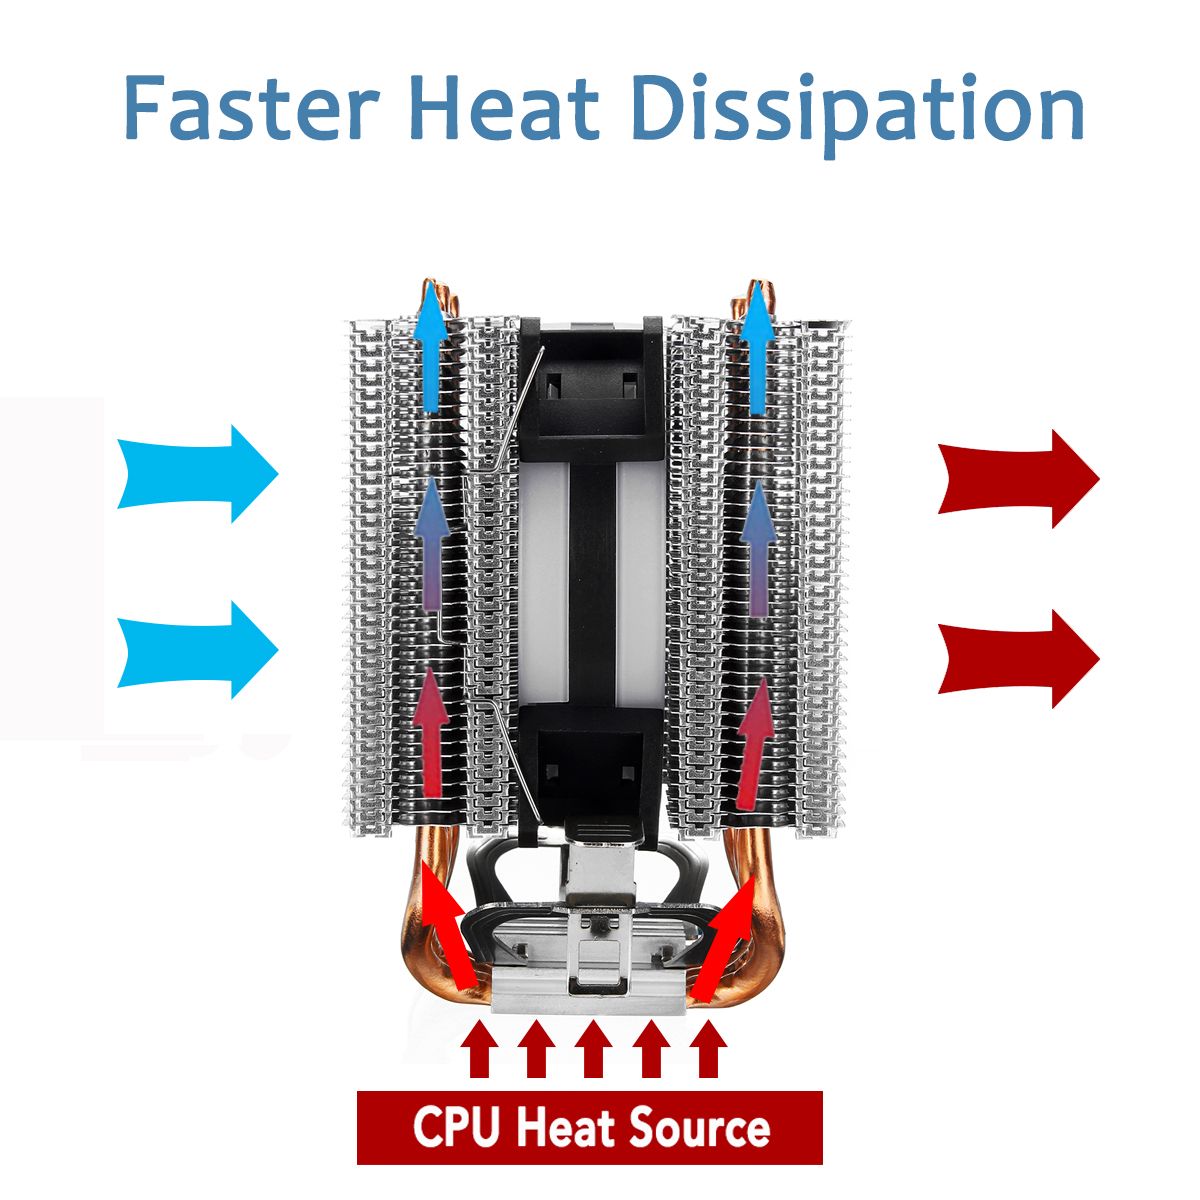 4Pin-4-Heatpipes-Colorful-Backlit-CPU-Cooling-Fan-Cooler-Heatsink-For-Intel-AMD-1475622